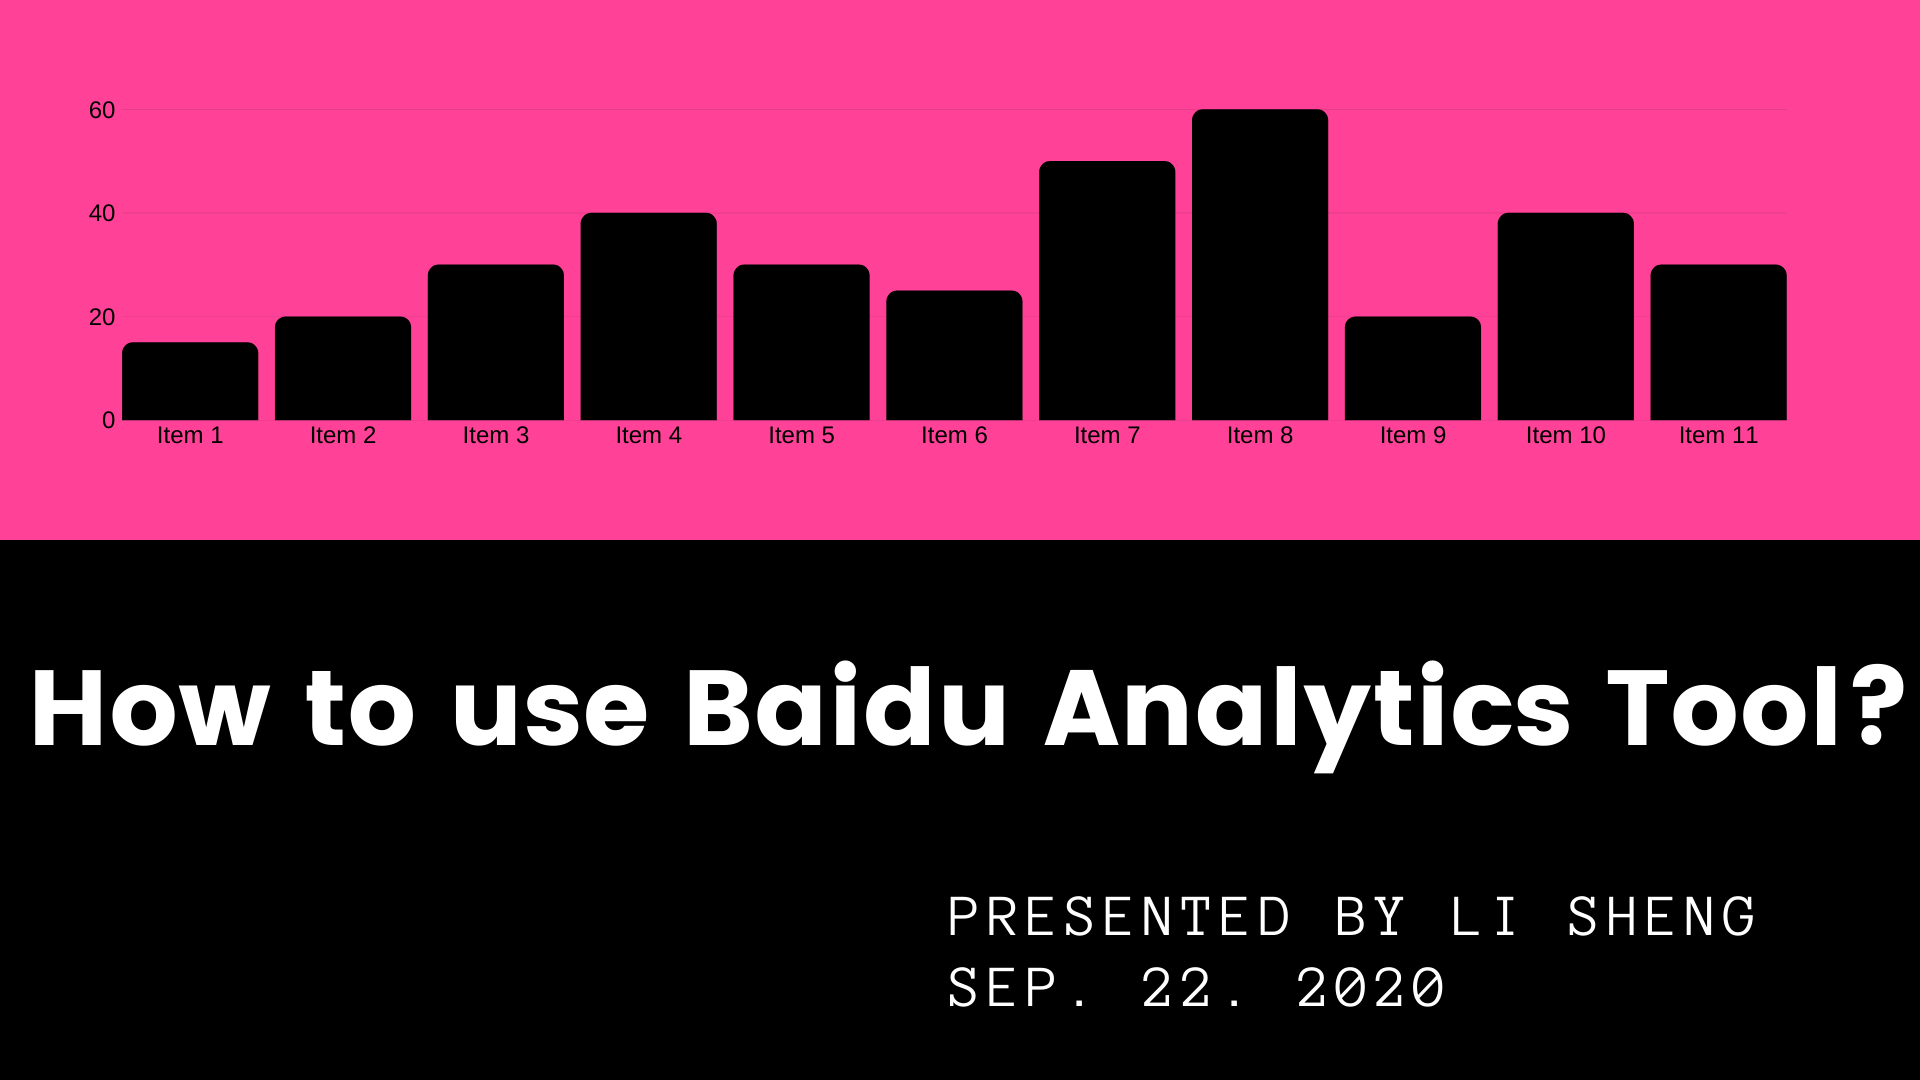 Baidu analytics Tool